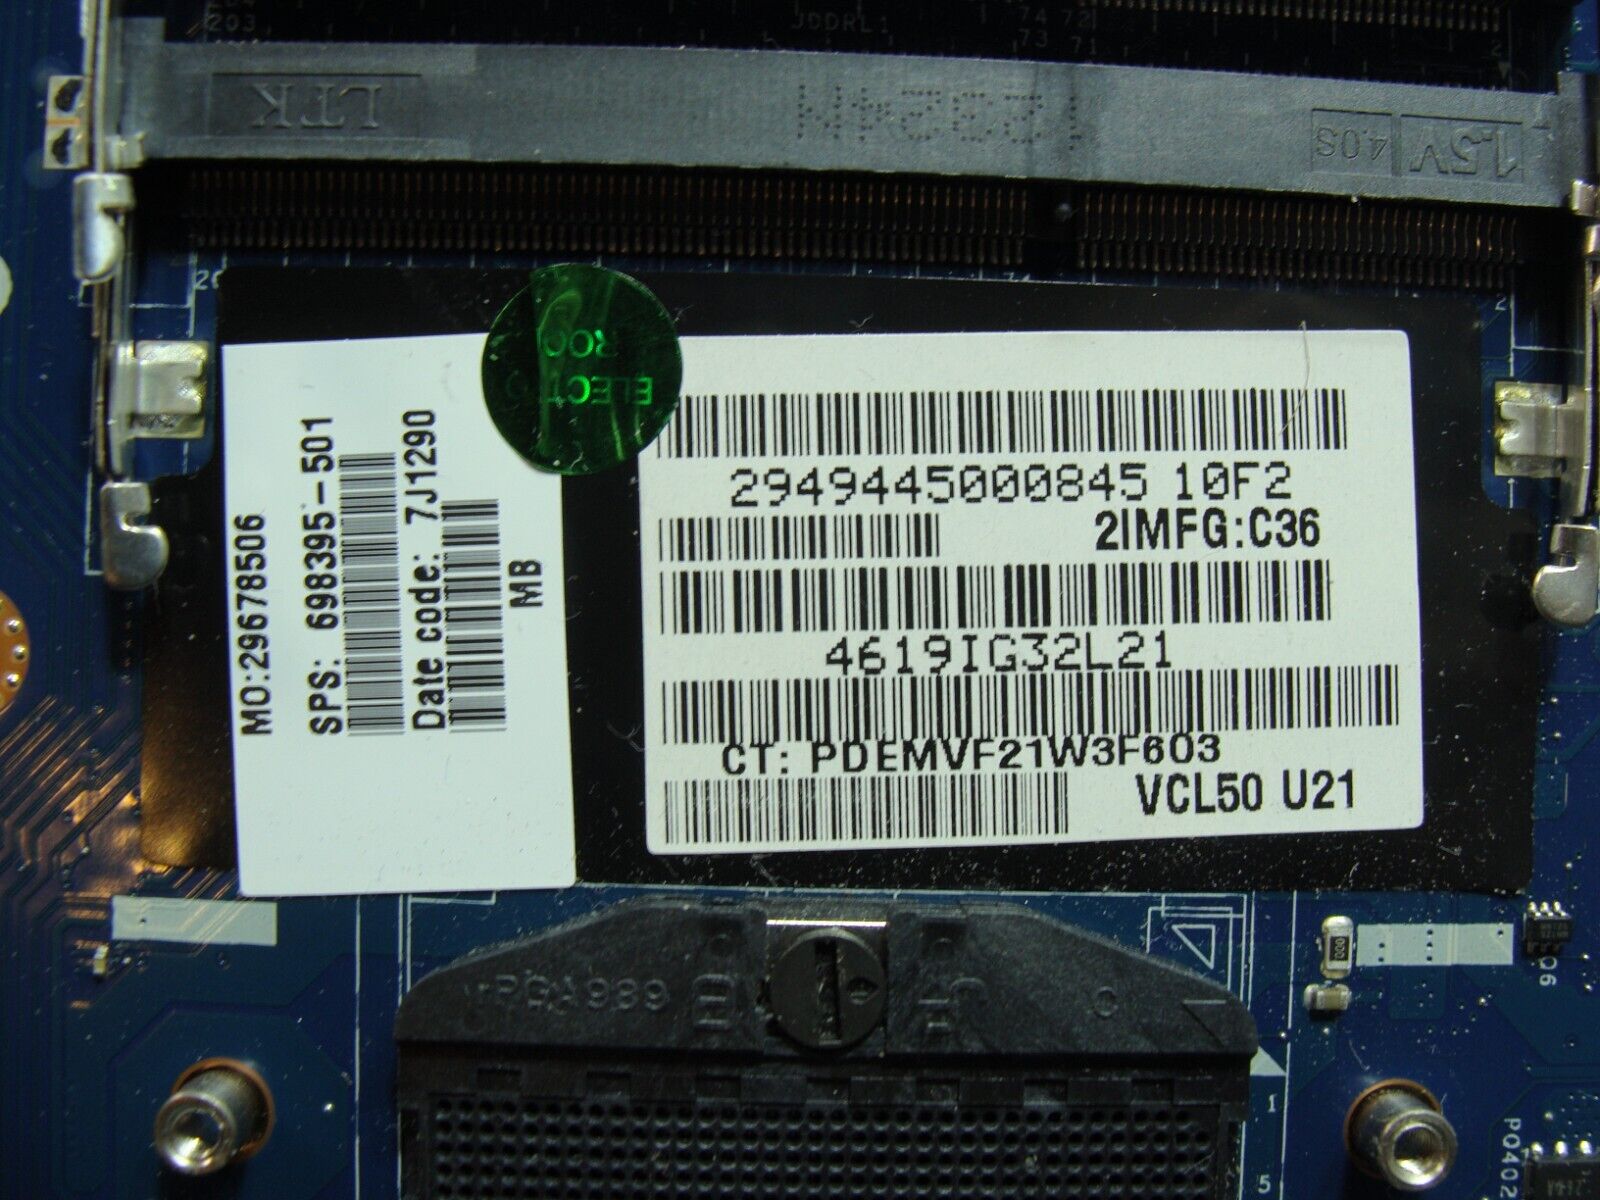 HP Envy m6-1125dx 15.6